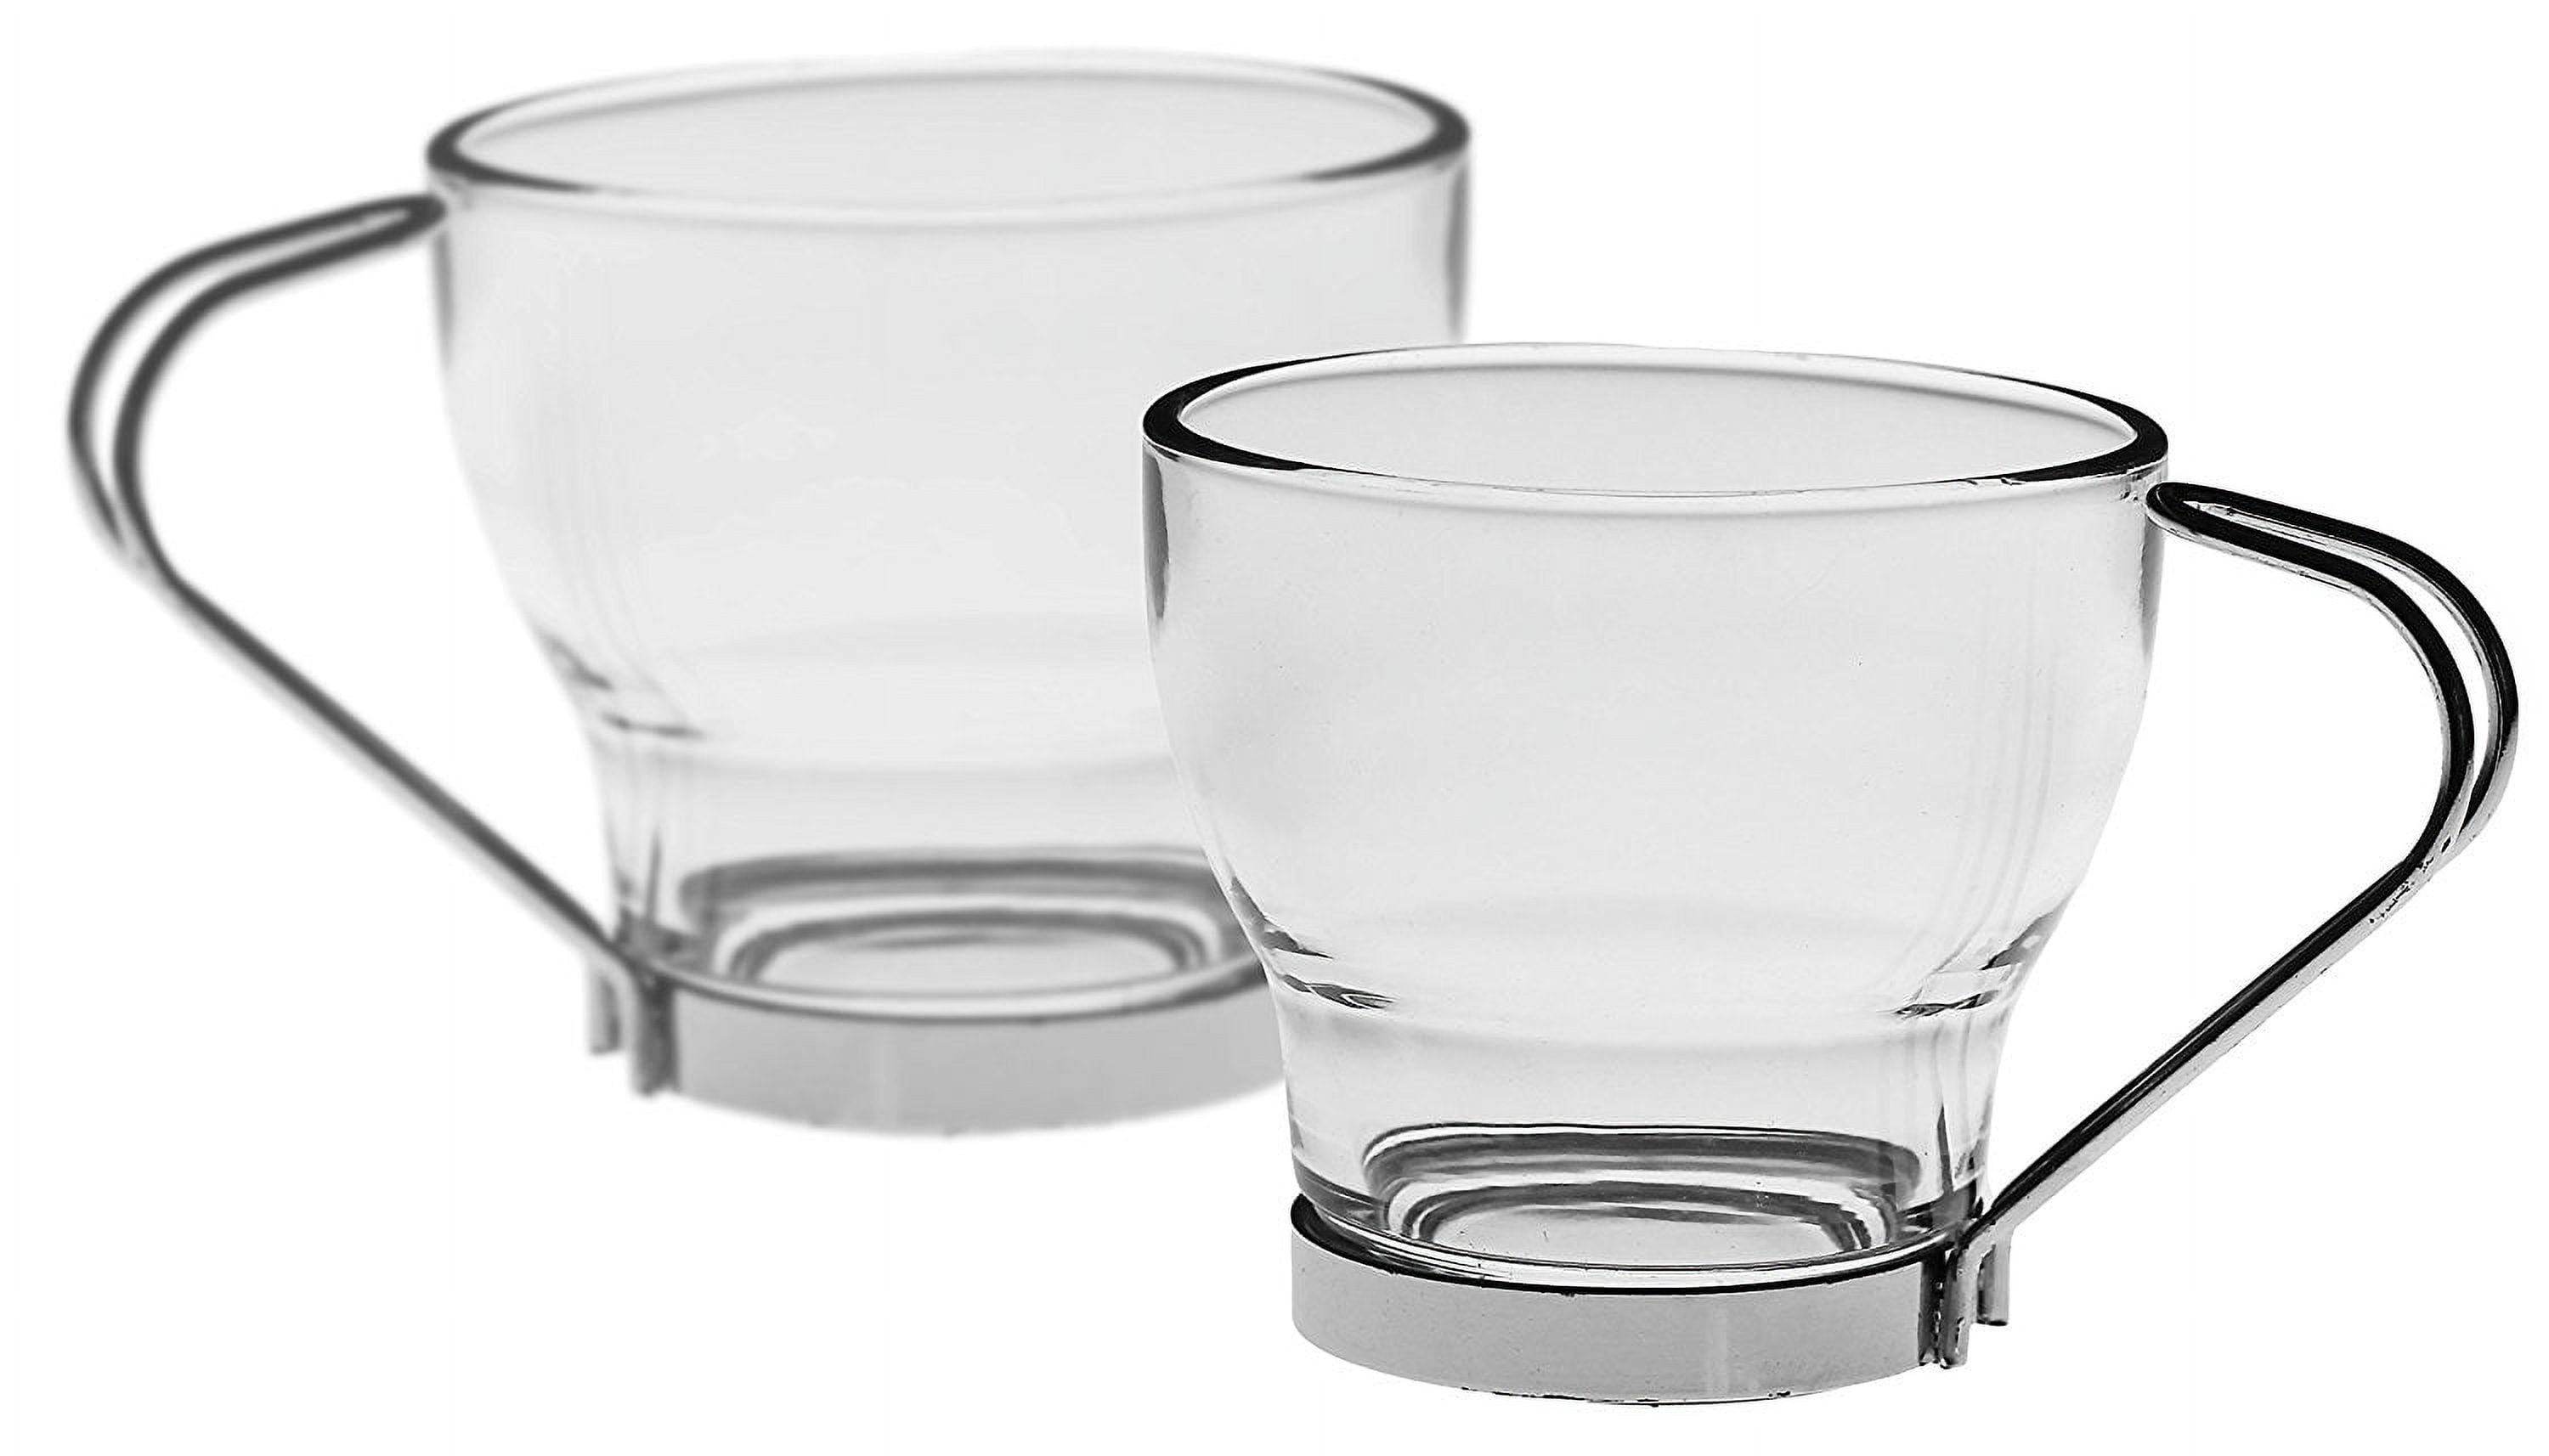 Bezrat Luxury Cappuccino Glass Coffee Tea Cups with Handle [Set of 6]